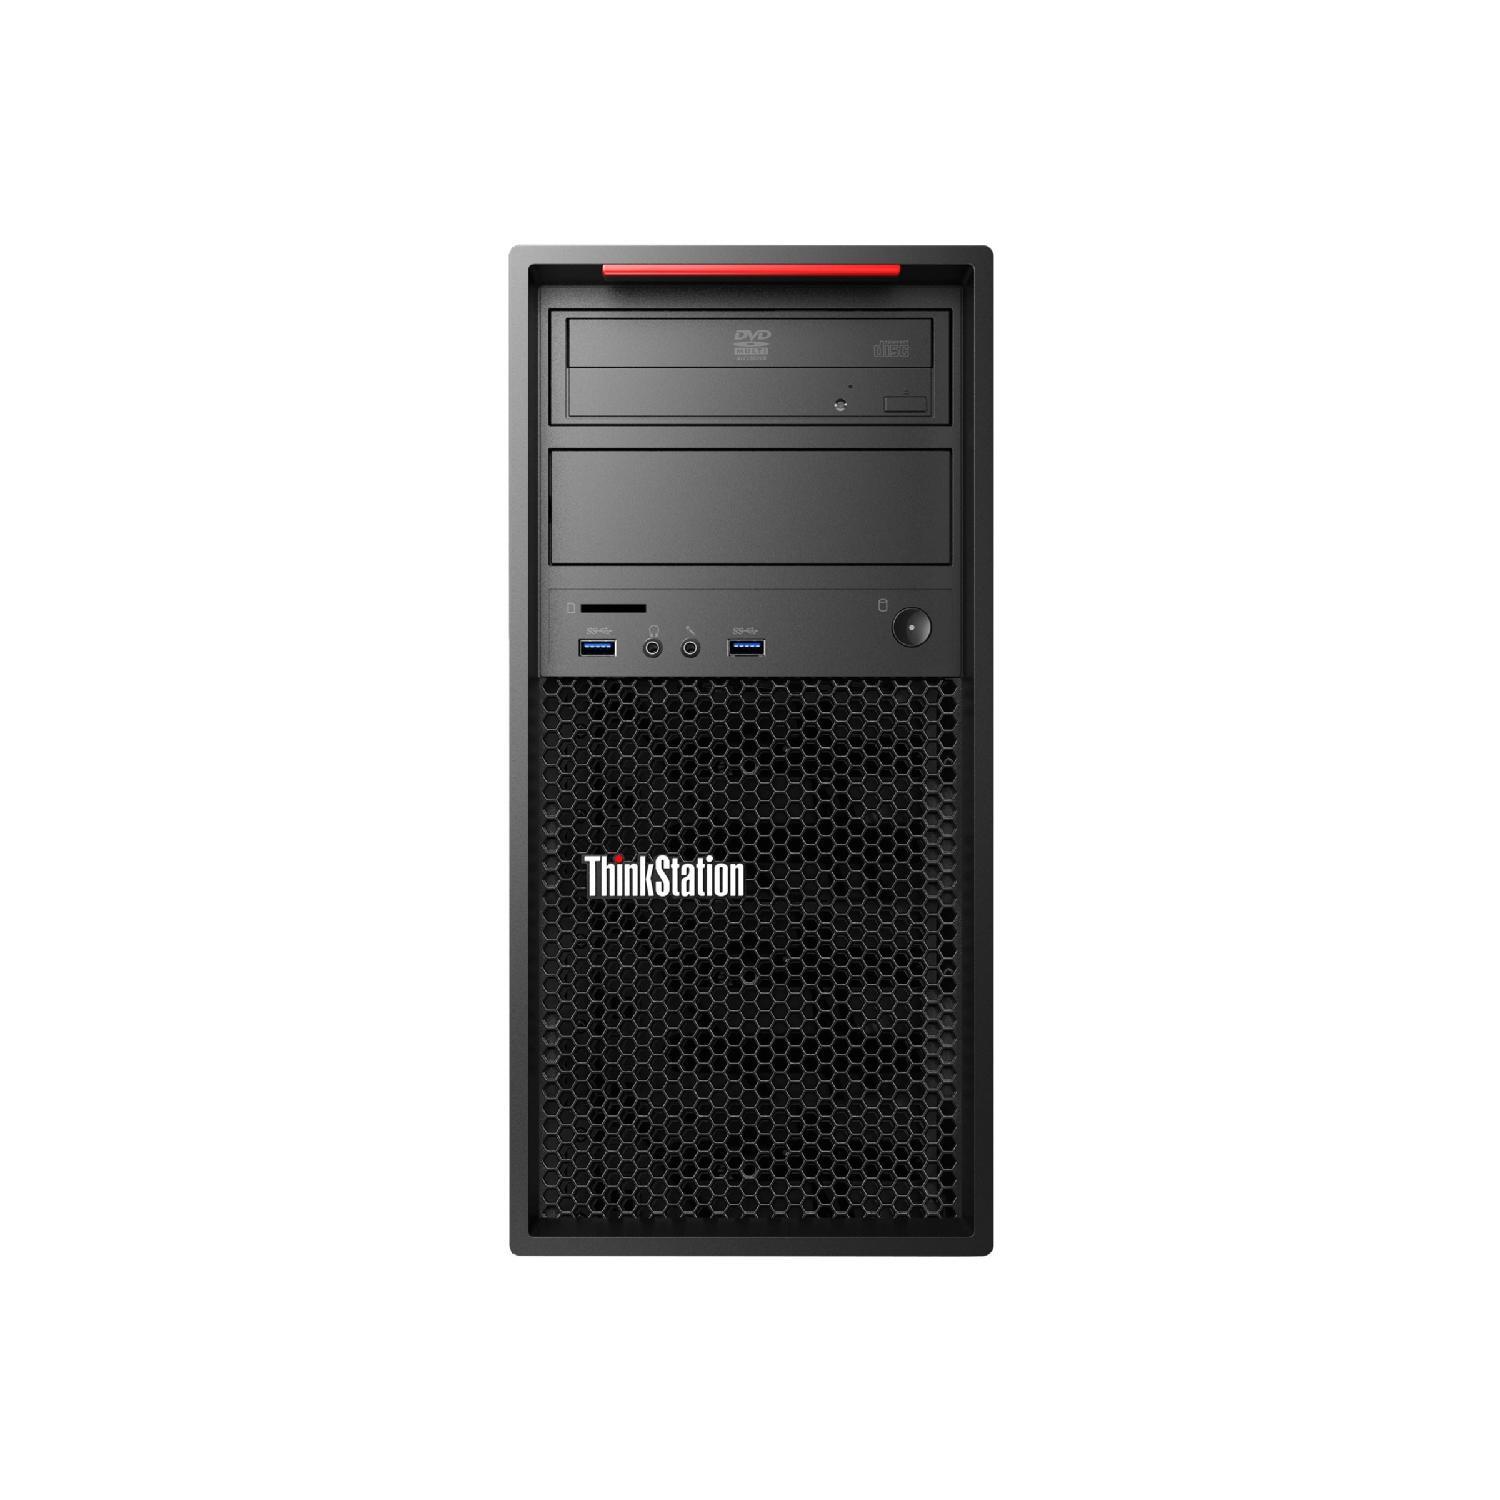 Lenovo ThinkStation P310 Tower i7 6700 3.40GHz 24GB RAM 2 x 256GB SSD Win 10 Full Size Image